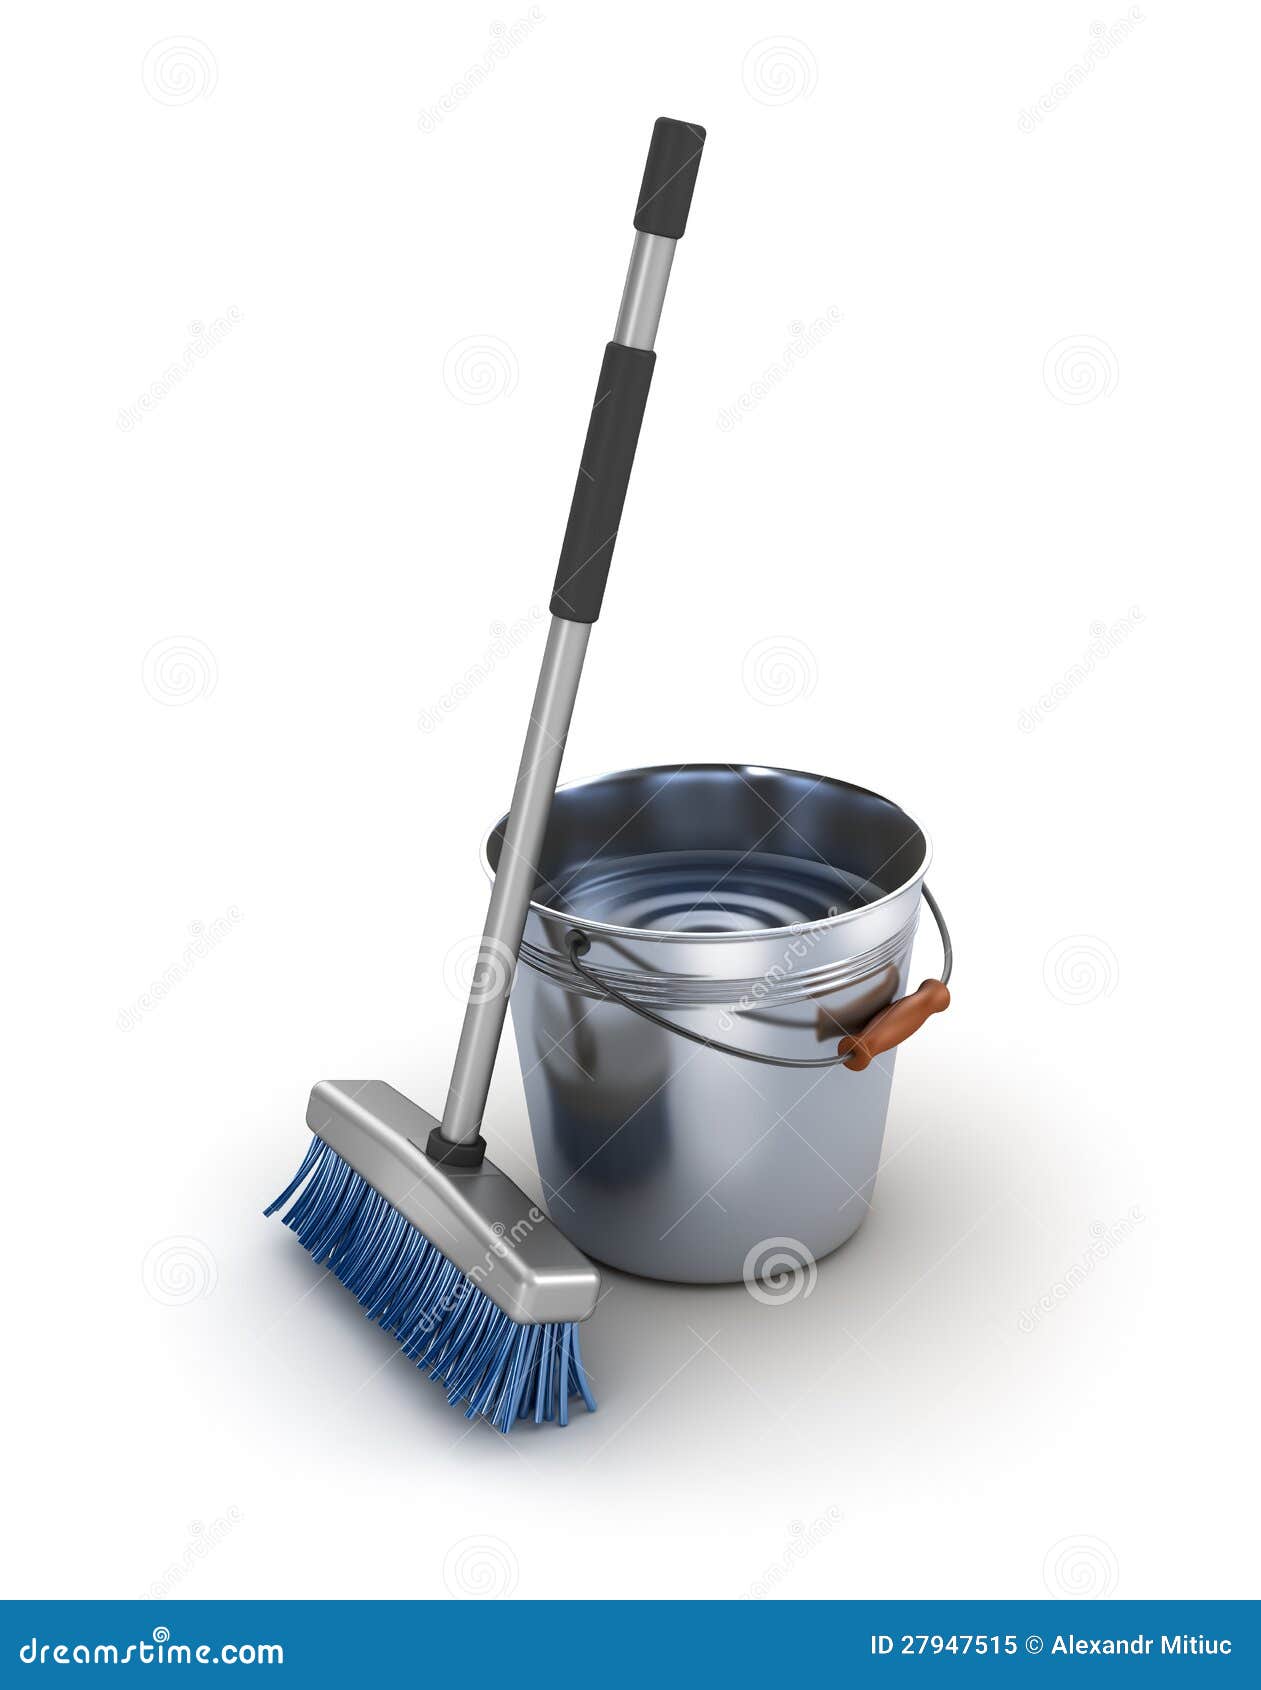 https://thumbs.dreamstime.com/z/cleaning-equipment-bucket-mop-27947515.jpg